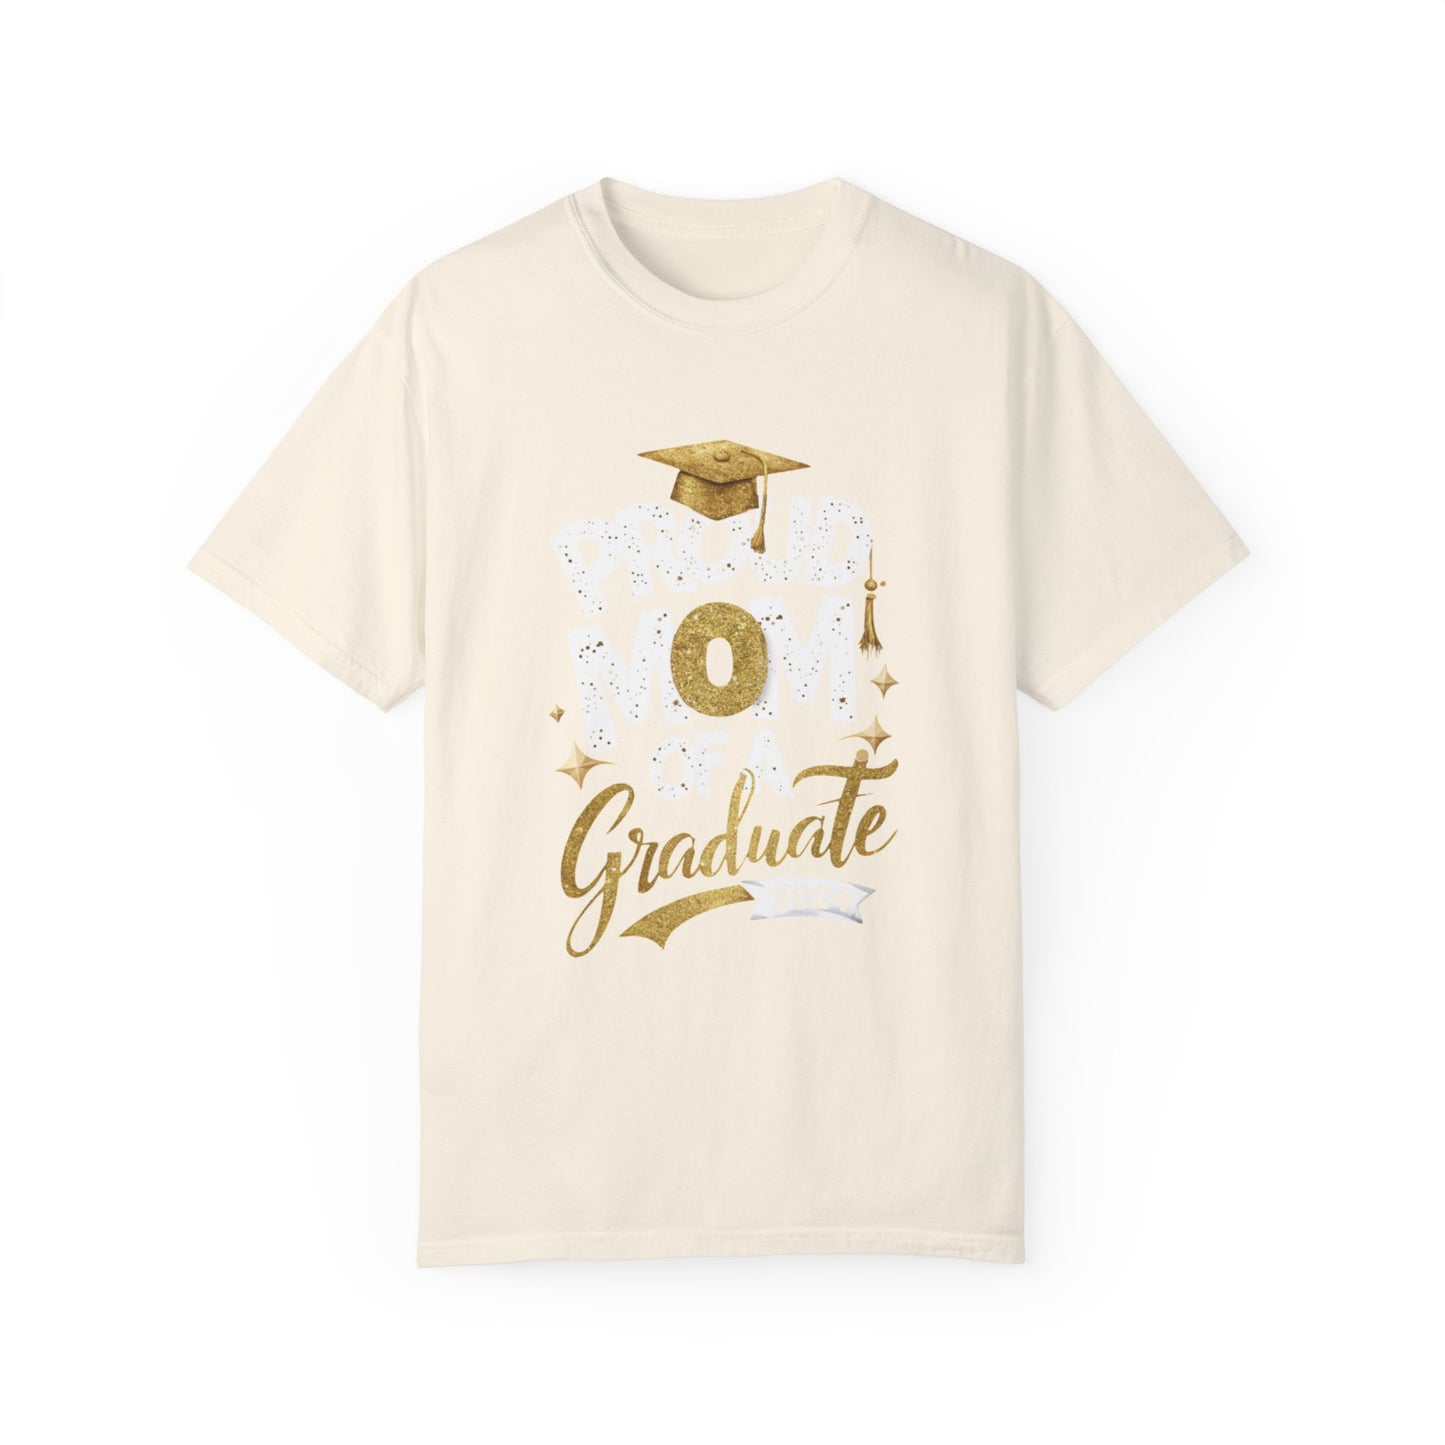 Proud Mom of a 2024 Graduate Unisex Garment-dyed T-shirt Cotton Funny Humorous Graphic Soft Premium Unisex Men Women Ivory T-shirt Birthday Gift-10